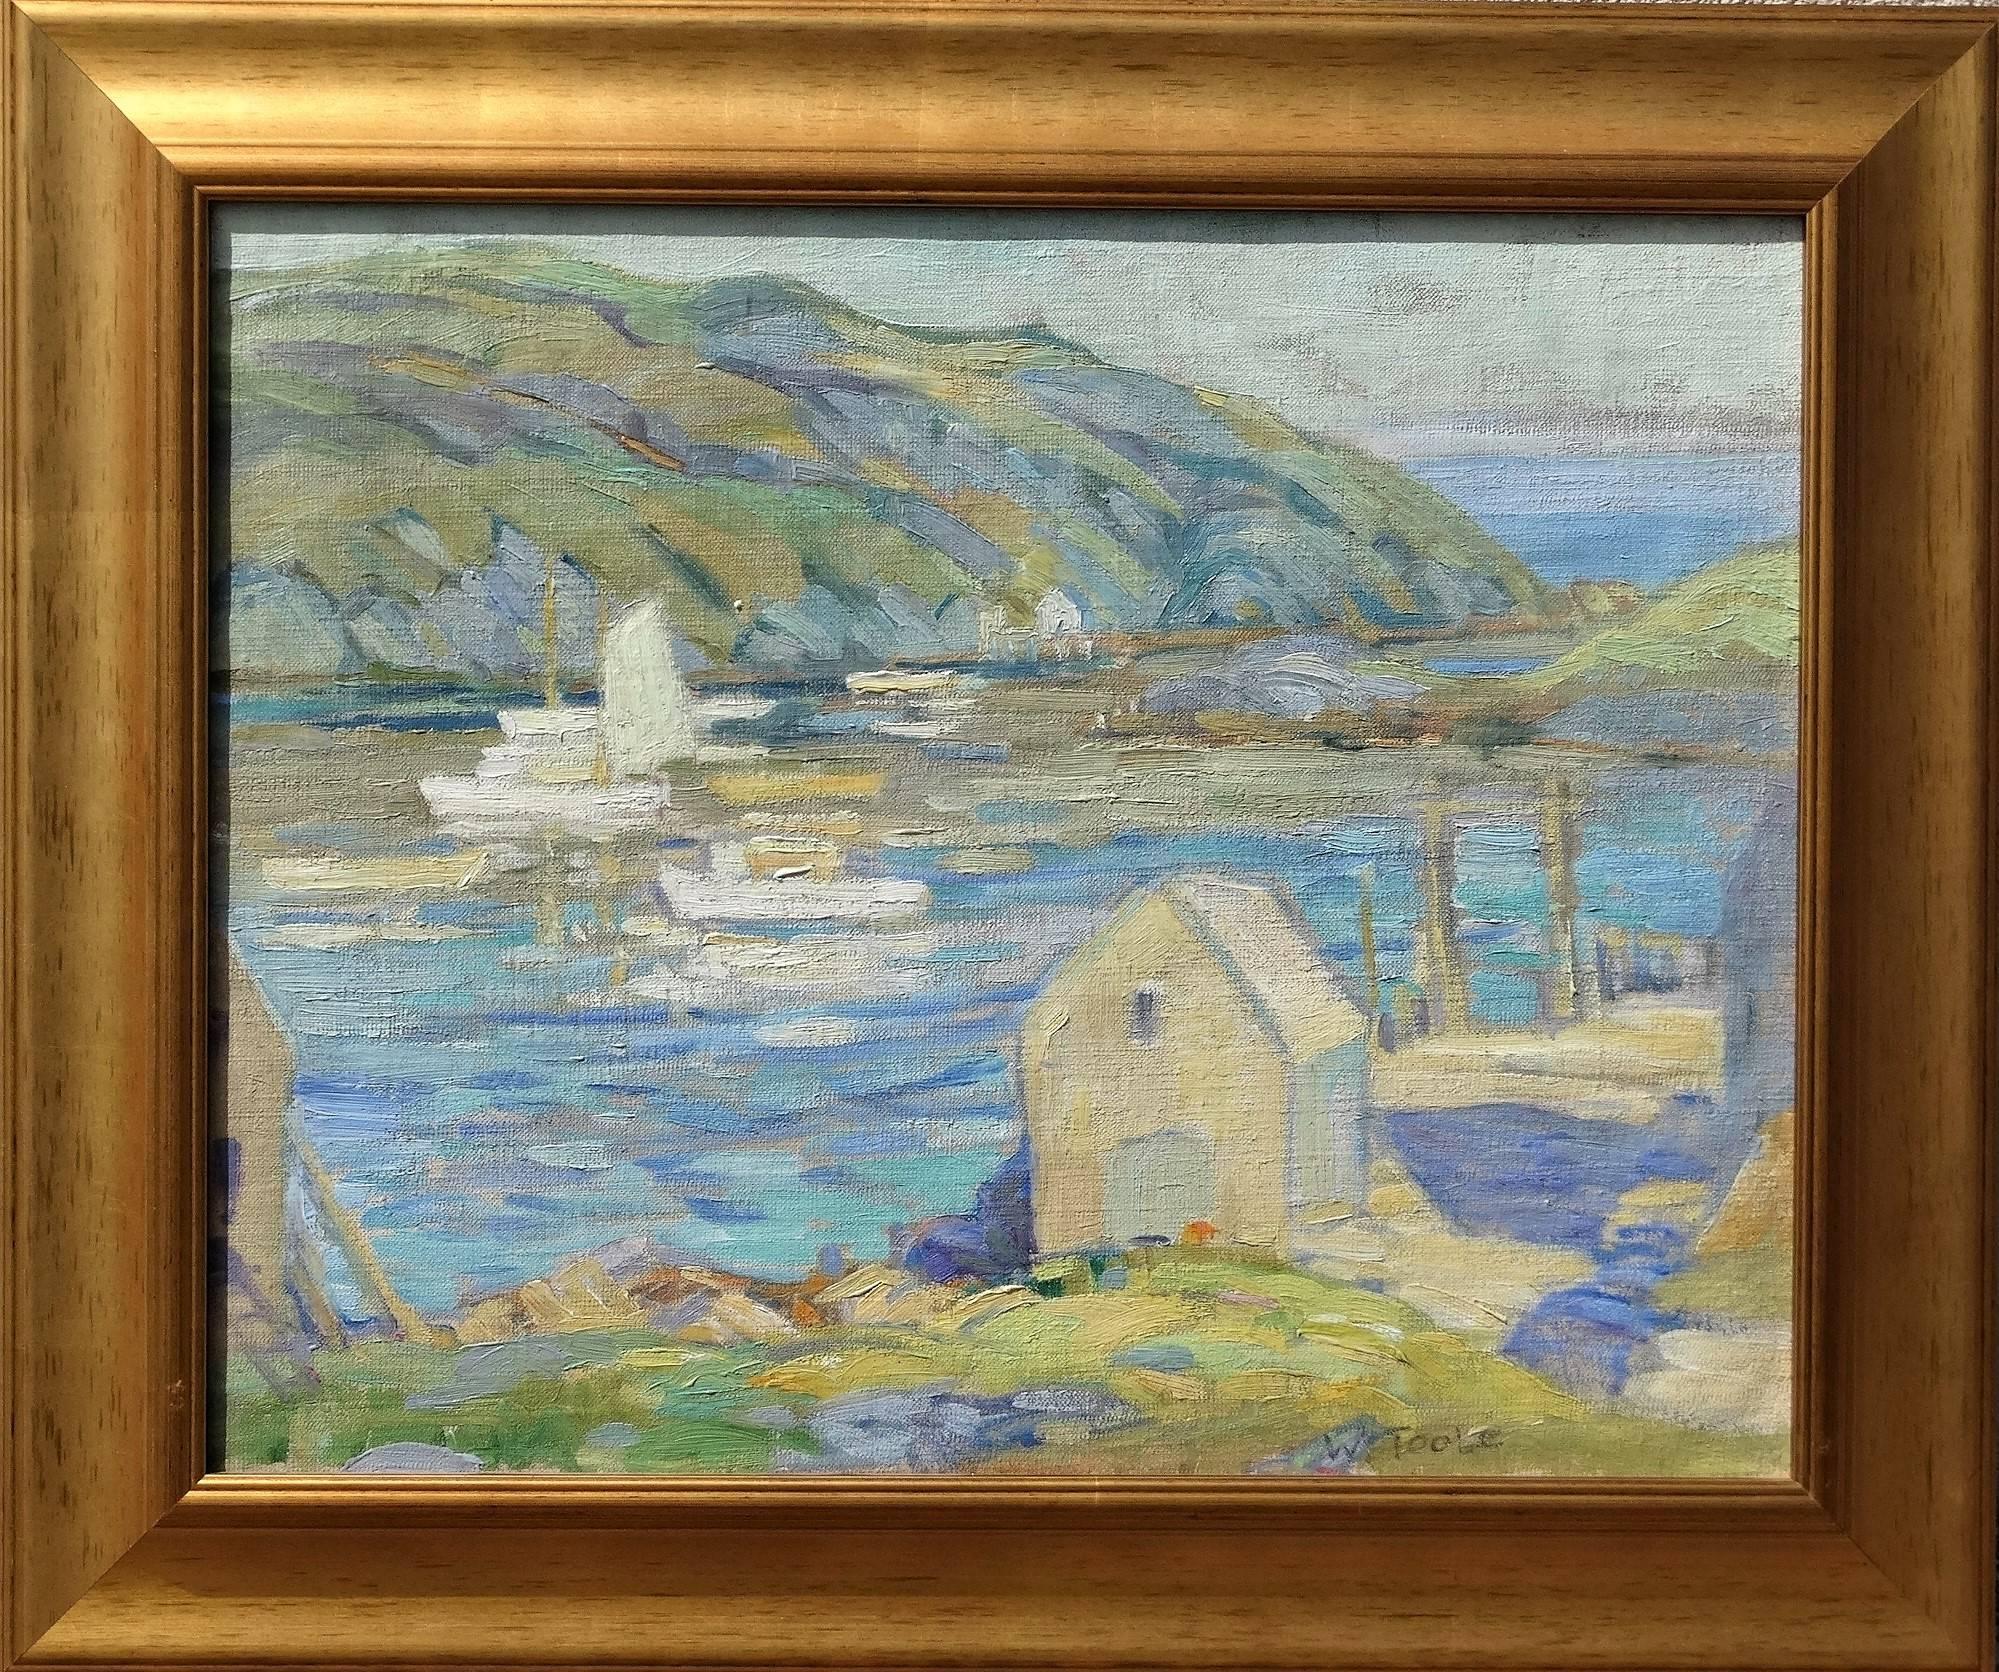 William Toole Landscape Painting - “The Wharf on Monhegan Island”